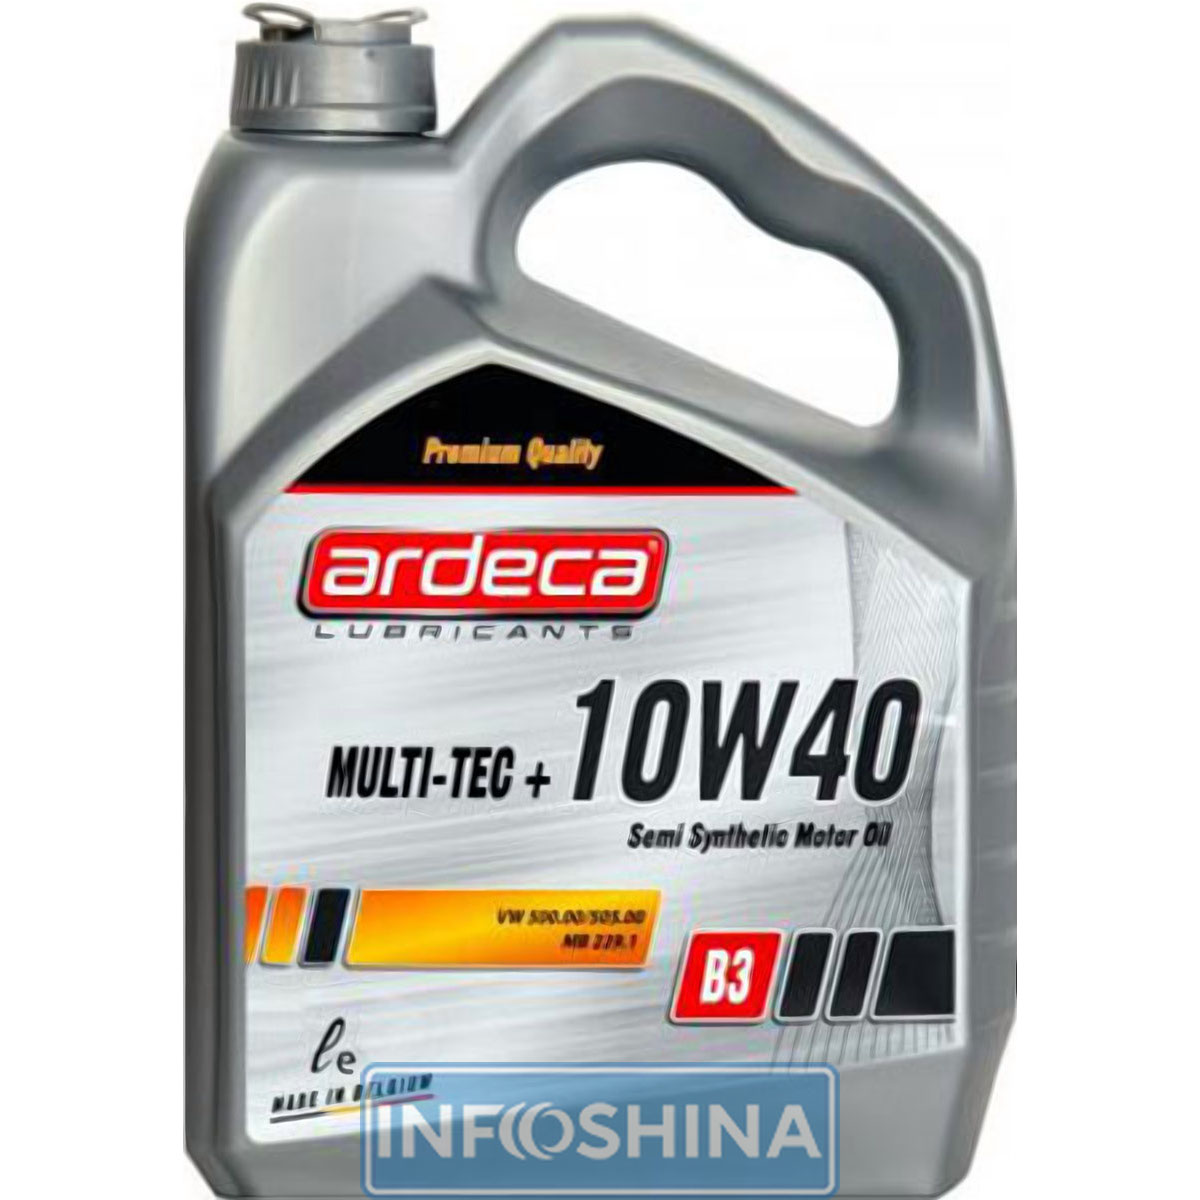 Купить масло Ardeca multi-tec + 10W-40 (4л)